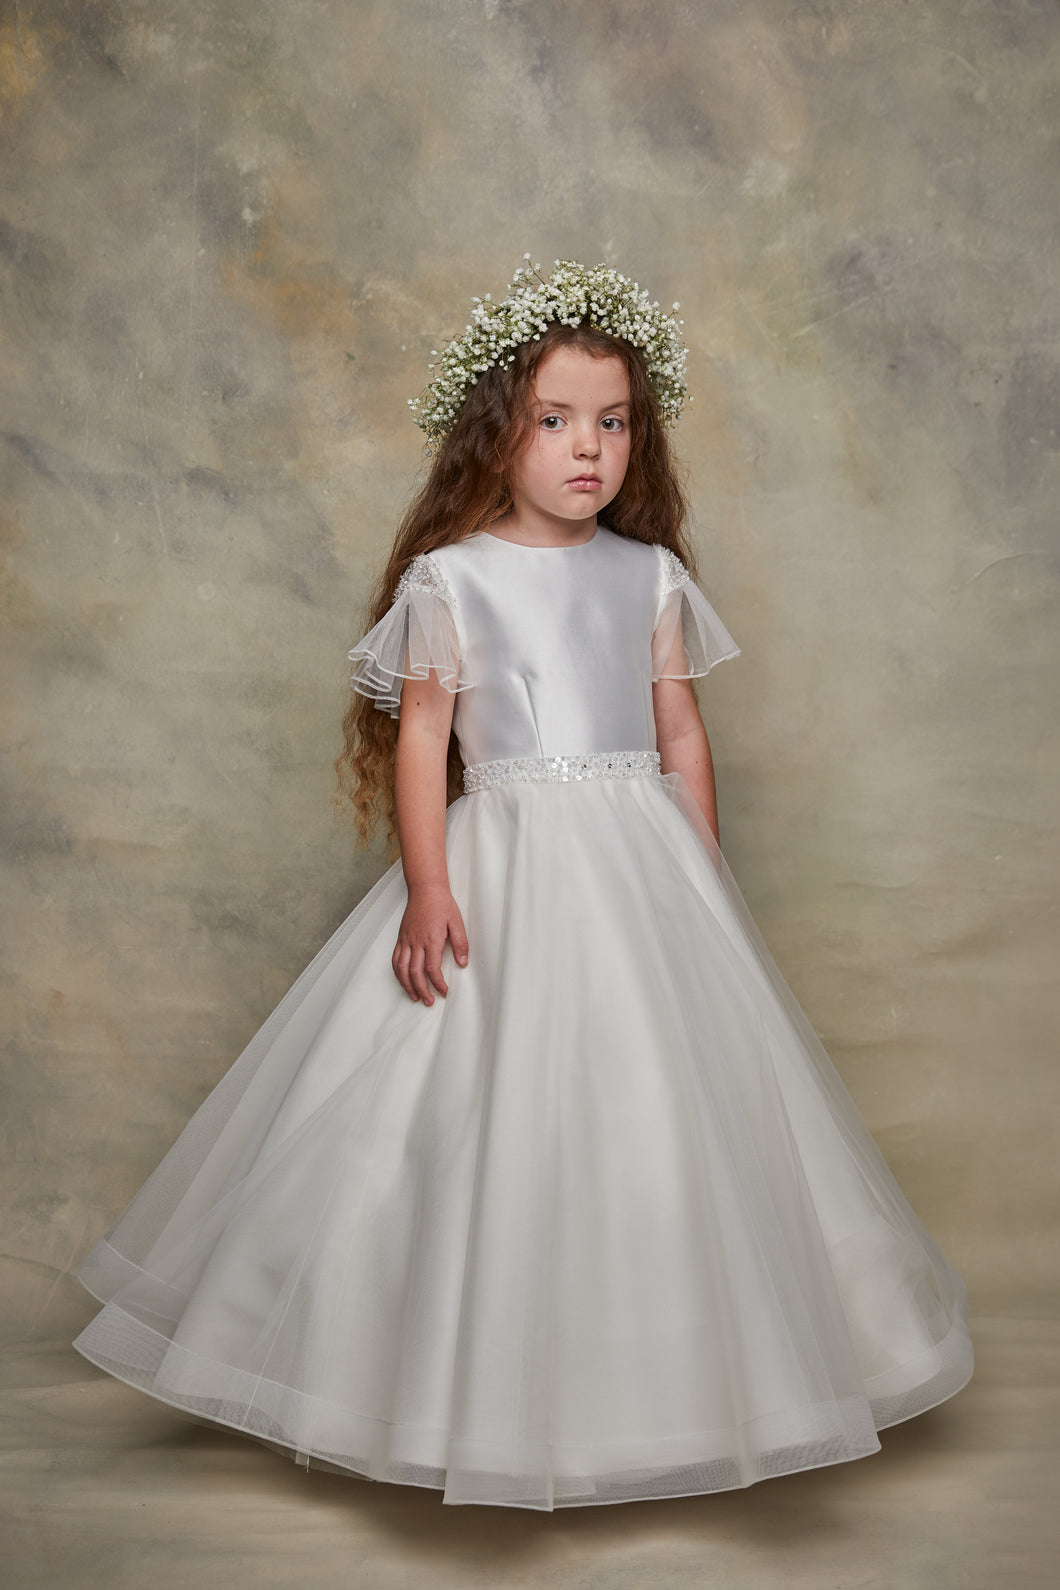 SALE COMMUNION DRESS Isabella Girls White Communion Dress:- IS23479 Age 7